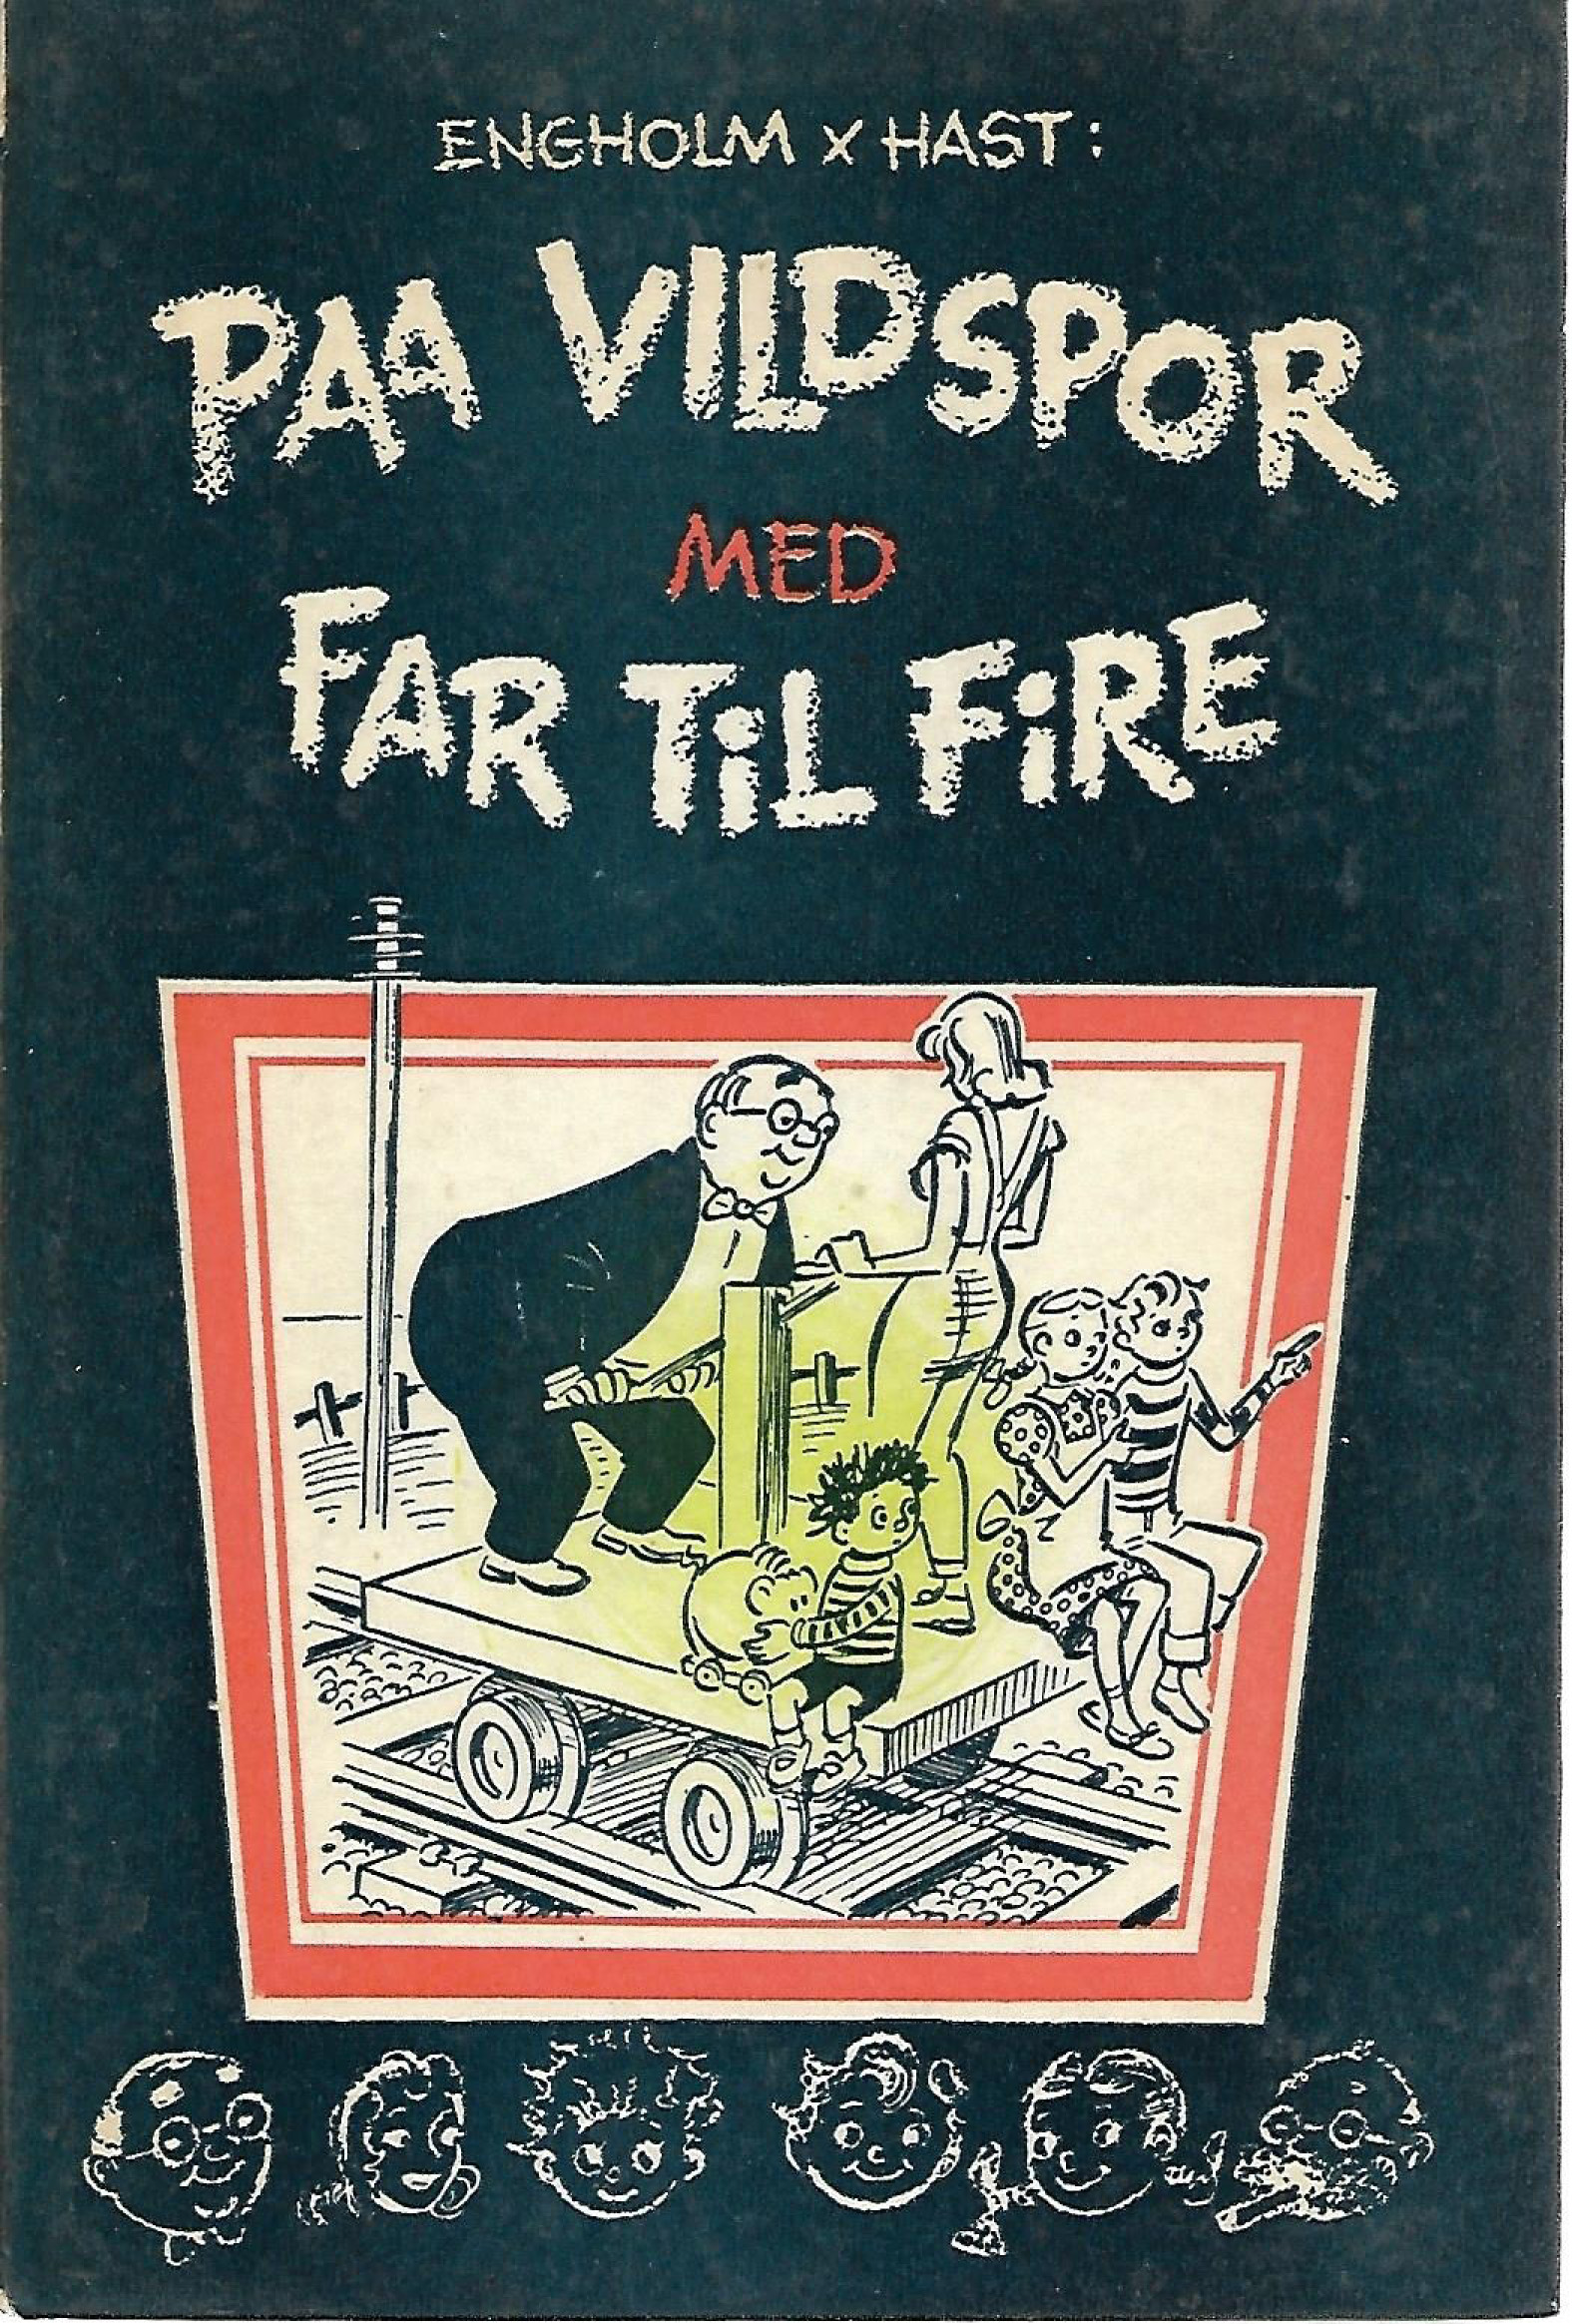 Paa vildspor med Far til Fire - Gitte Palsby og Engholm 1956-1